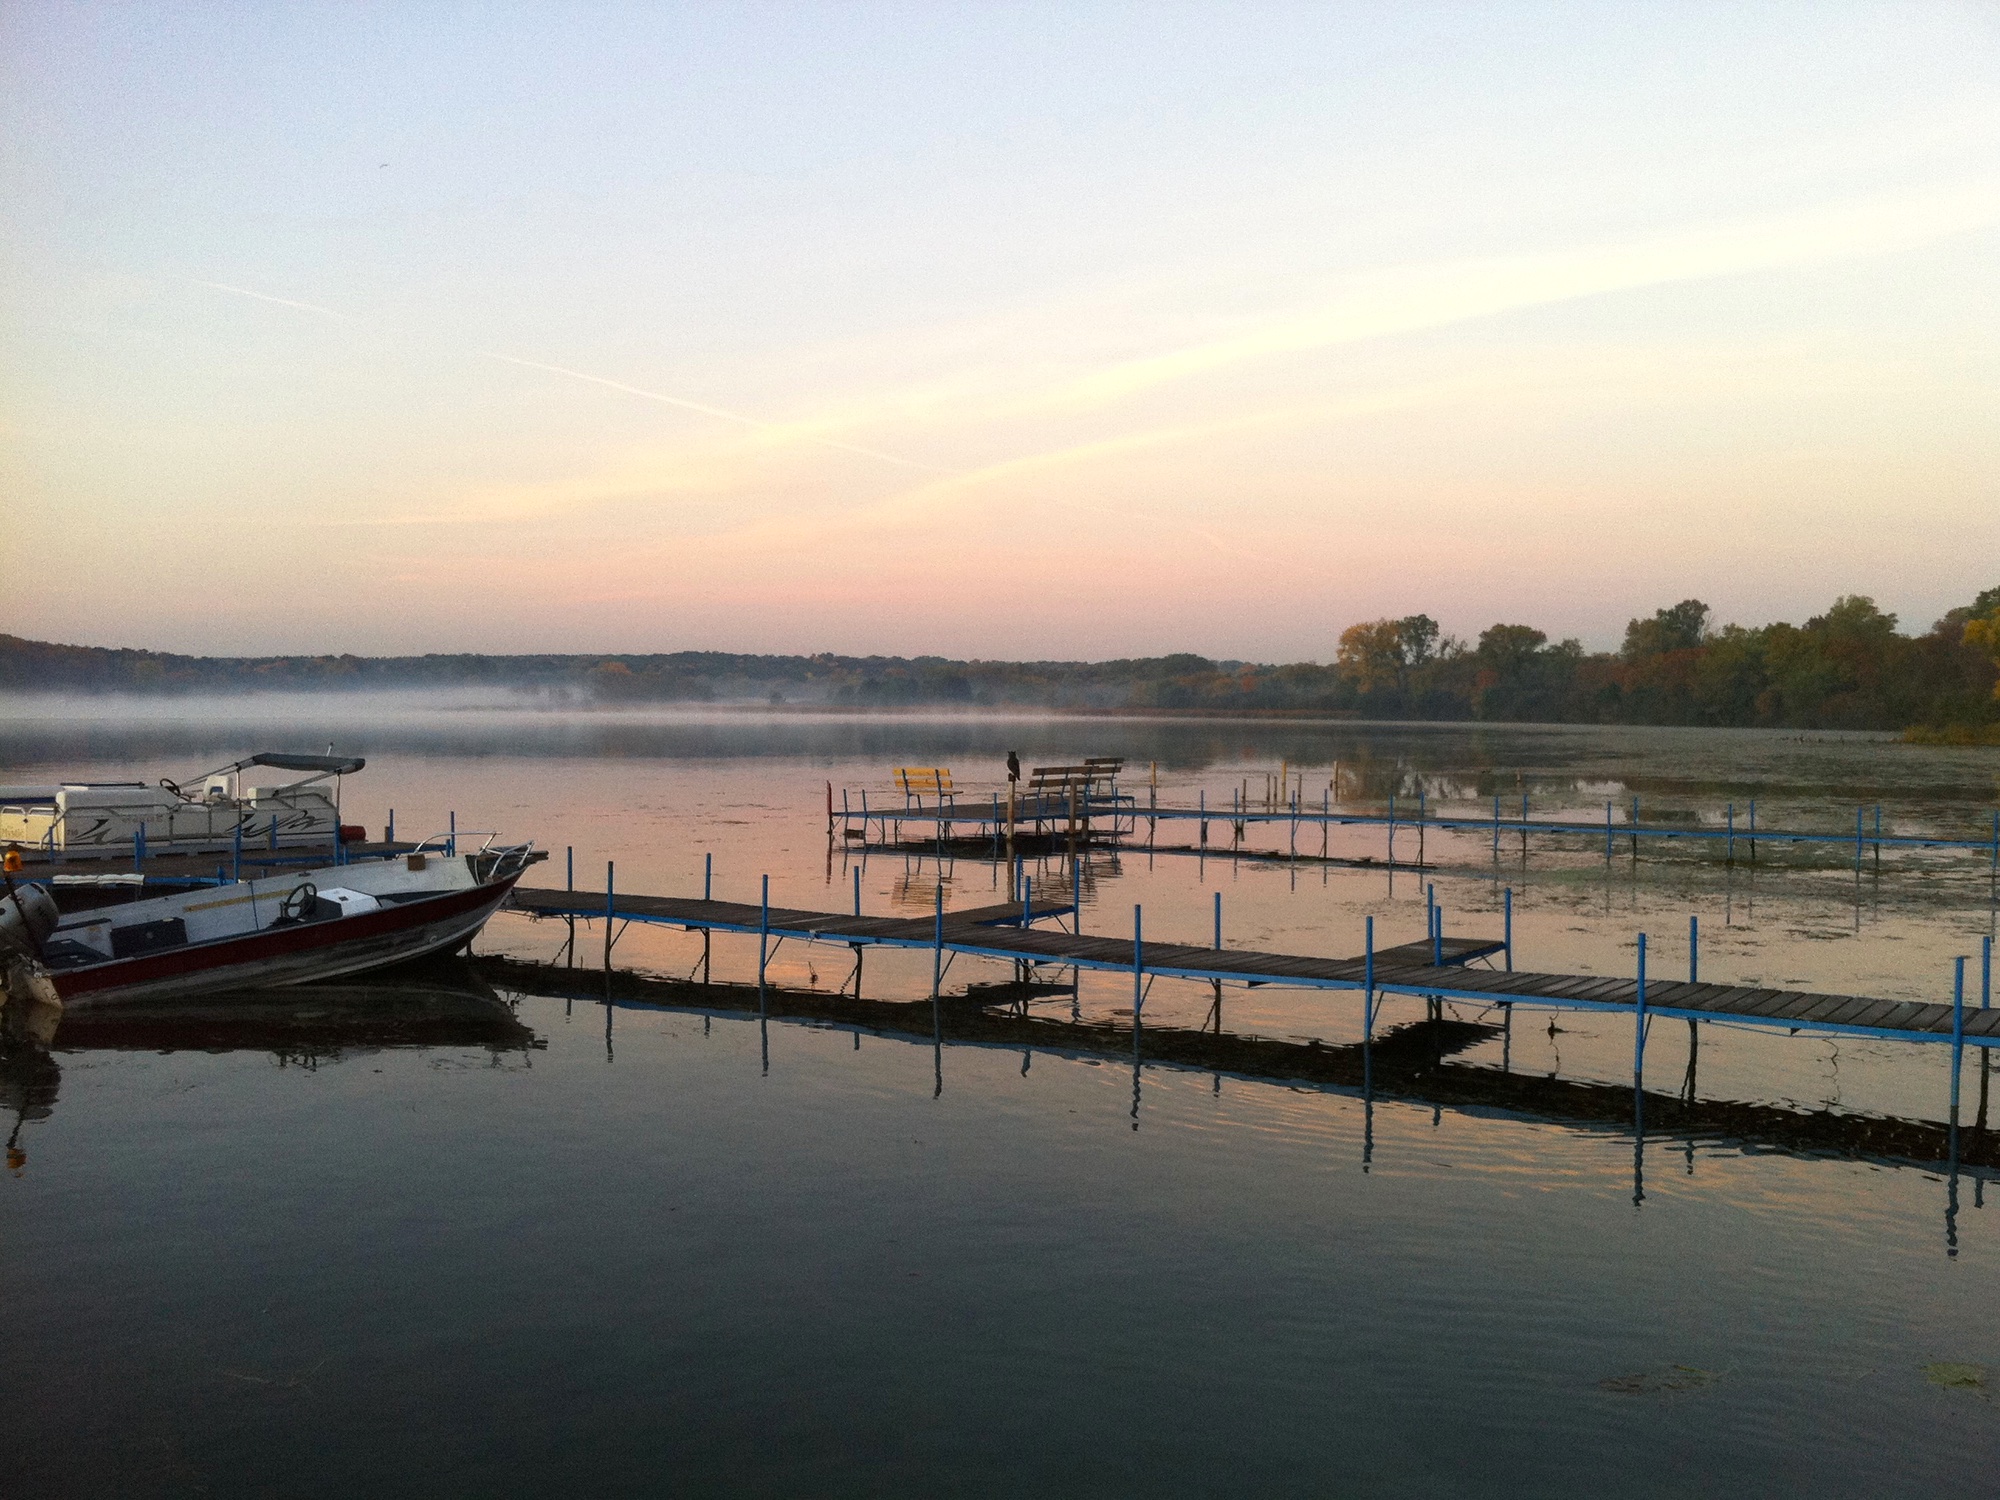 Wingra Boats on Lake Wingra in Madison, Wisconsin on October 7, 2011.